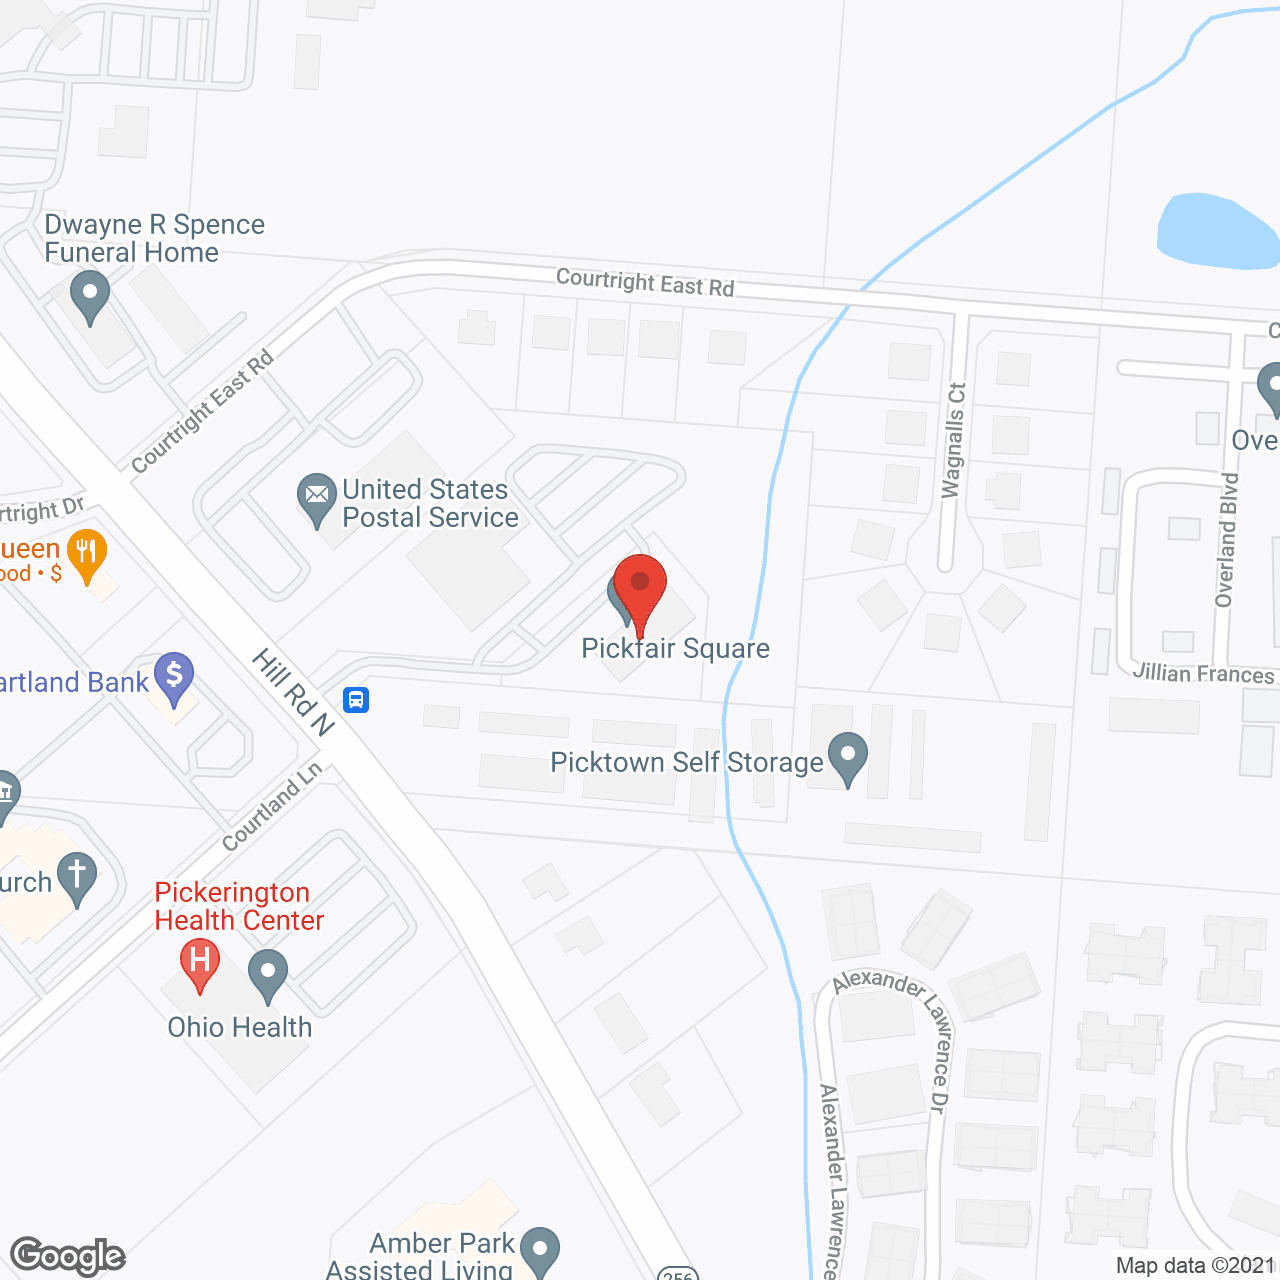 Pickfair Square in google map